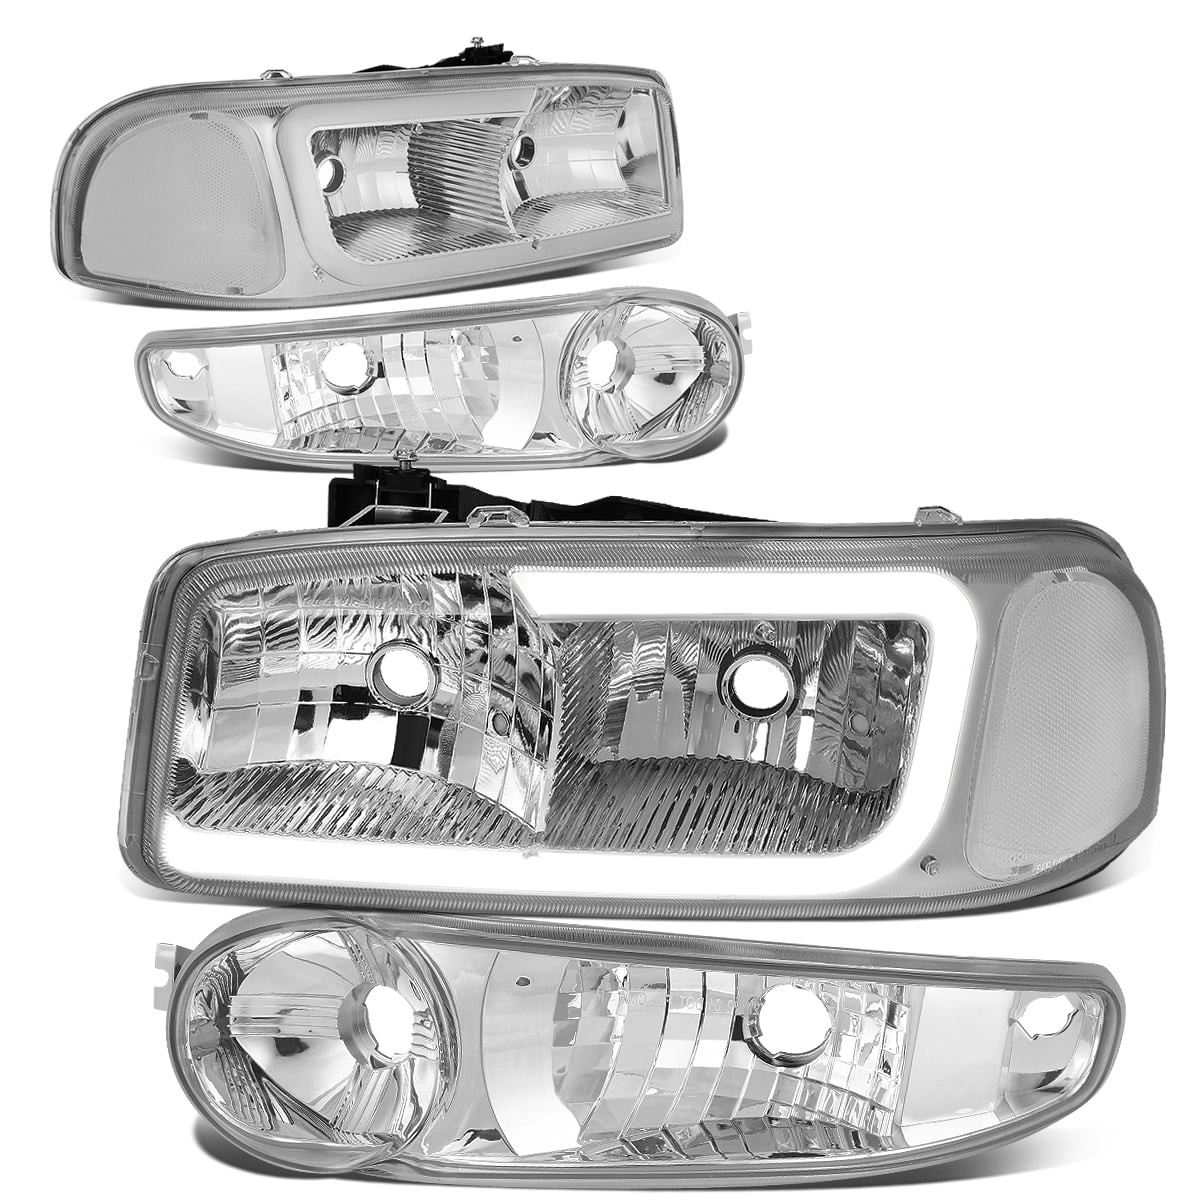 XL/Denali For 01-06 GMC Sierra Yukon Chrome Clear Bumper Corner Singal Light Lamp Assembly 